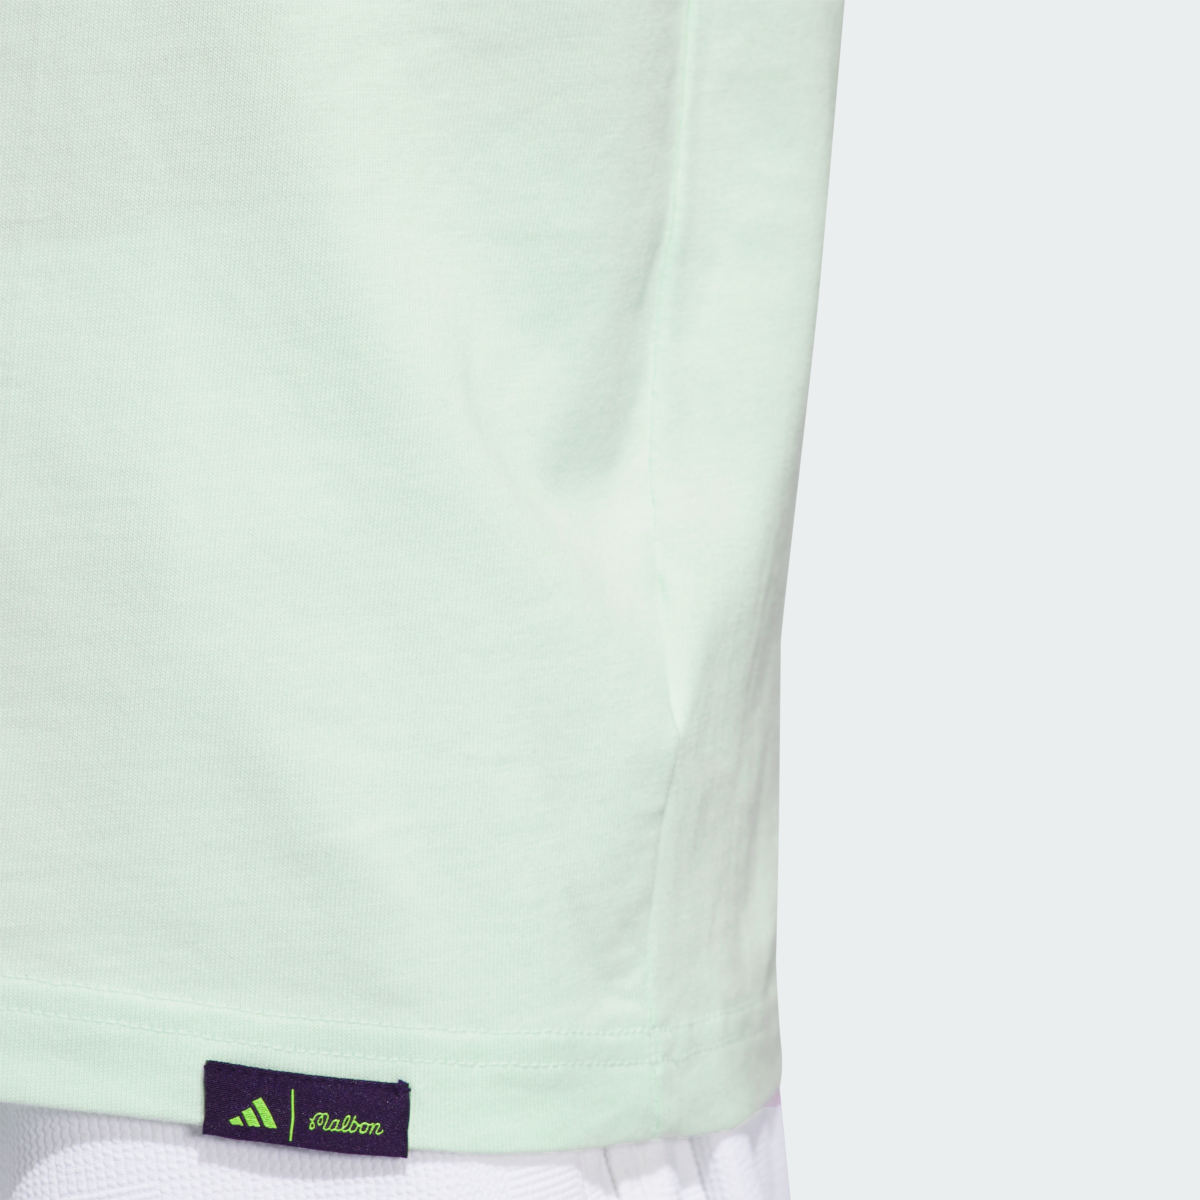 Adidas Koszulka adidas x Malbon Graphic. 10